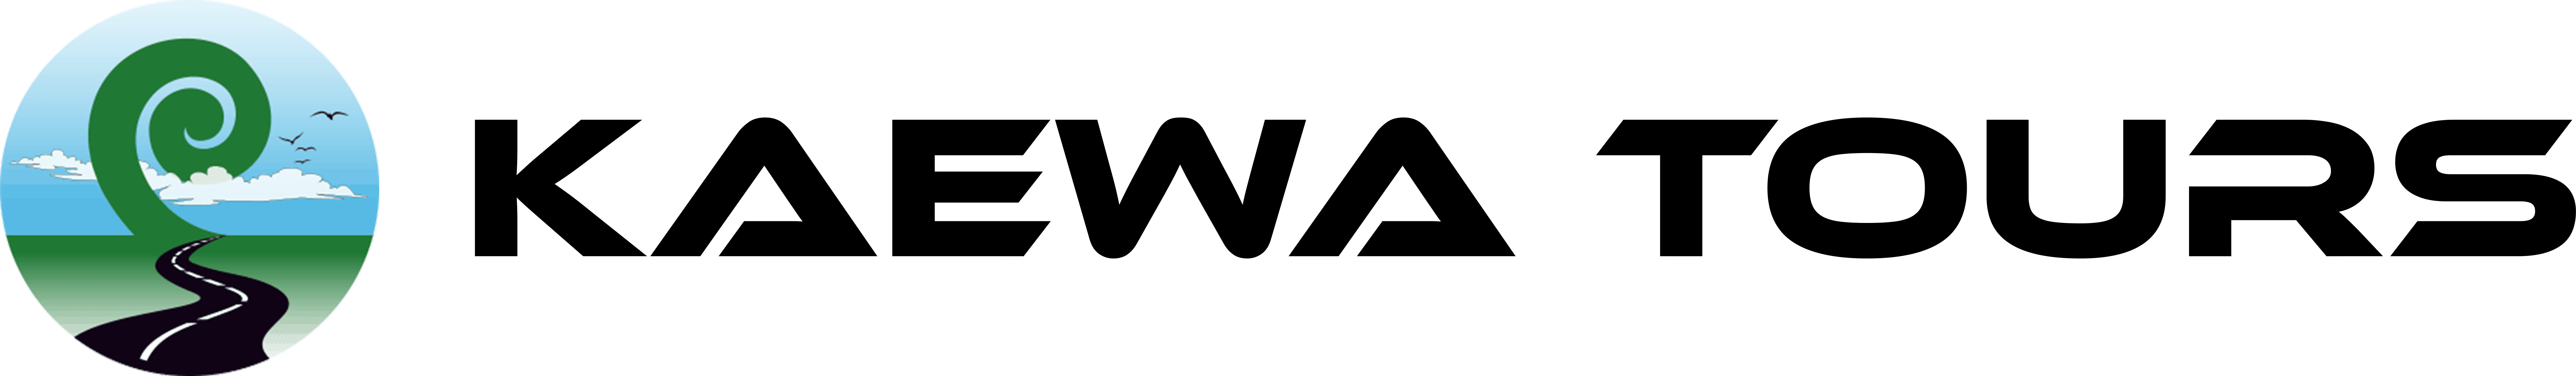 kaewa tours logo